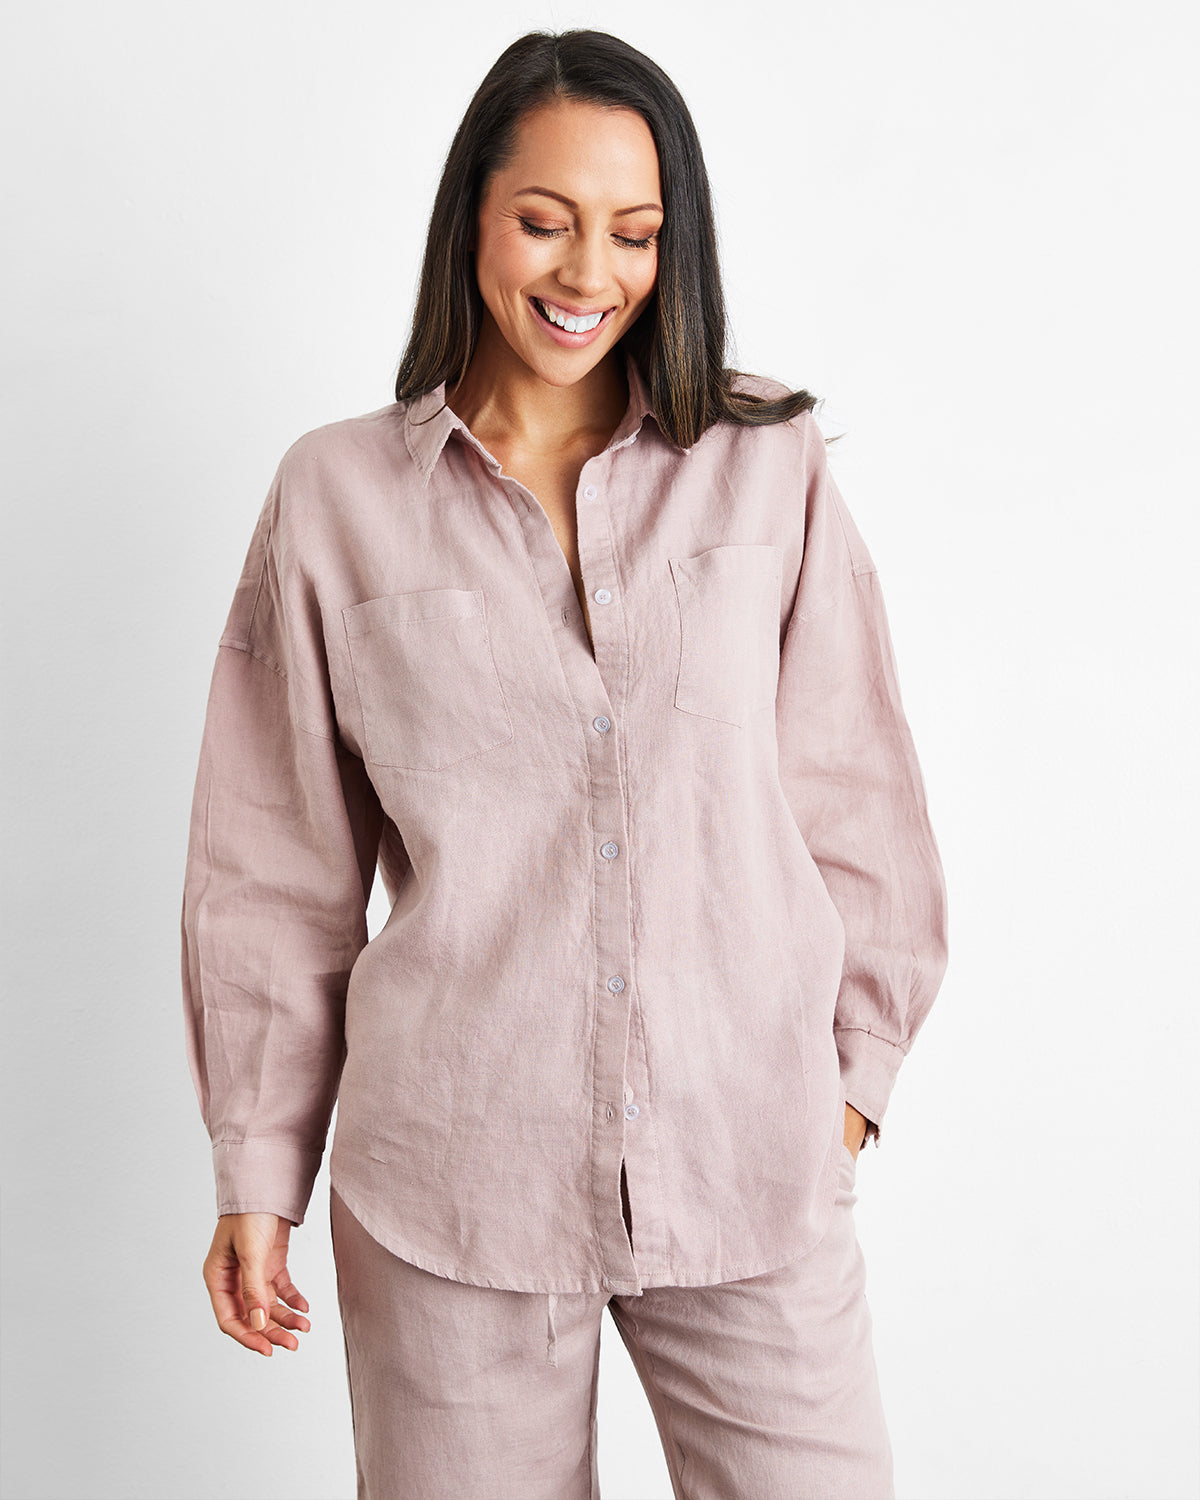 FLAX Globetrotter Women's Purple Wash Linen Button Up Long Sleeve Shirt  Size S